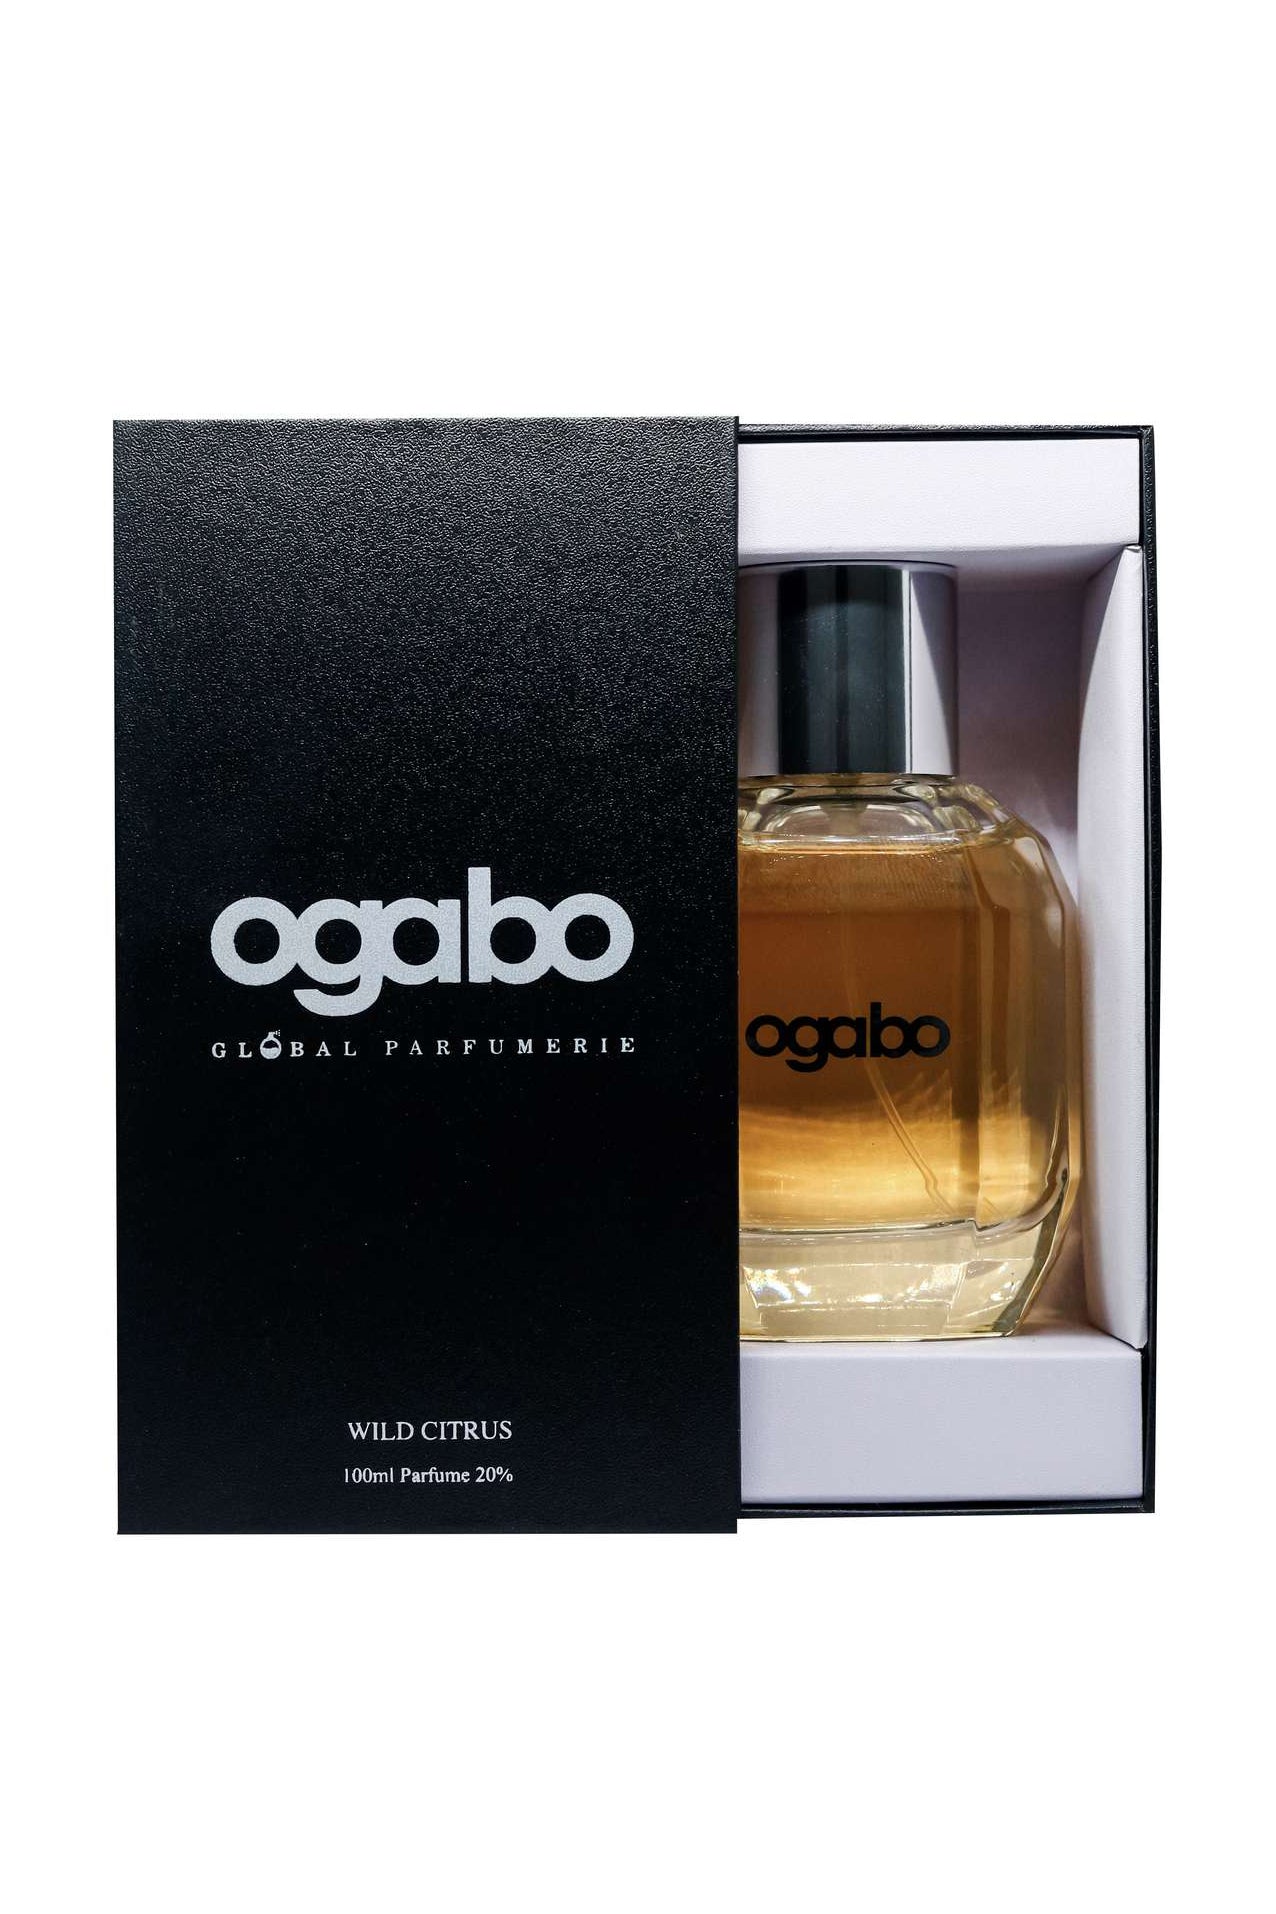 Ogabo Wild Citrus Men's Perfume 100ml